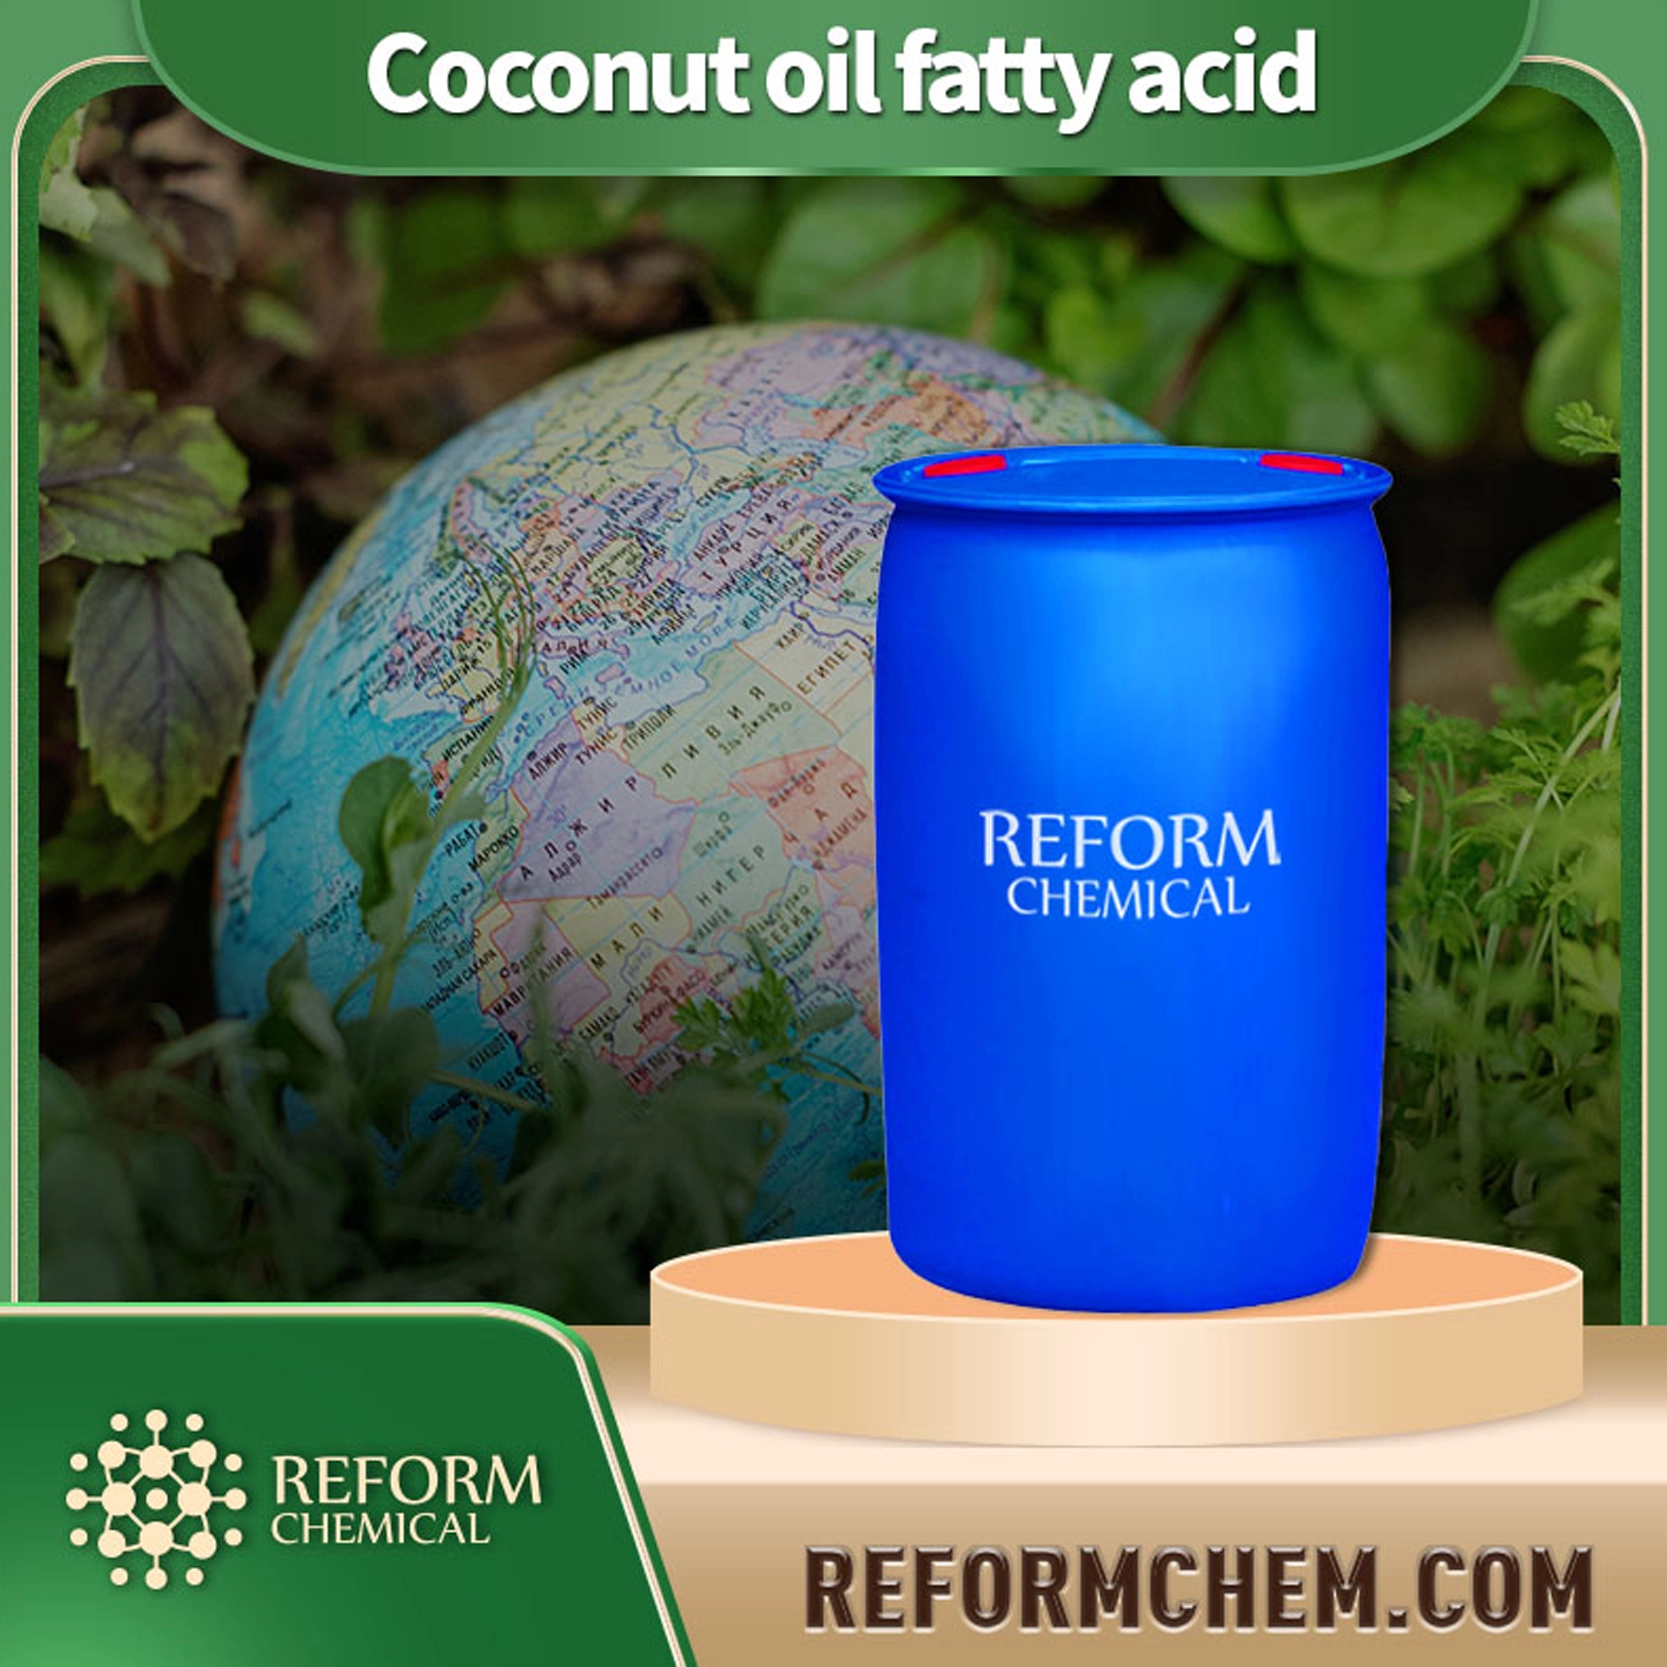 Coconut oil fatty acid